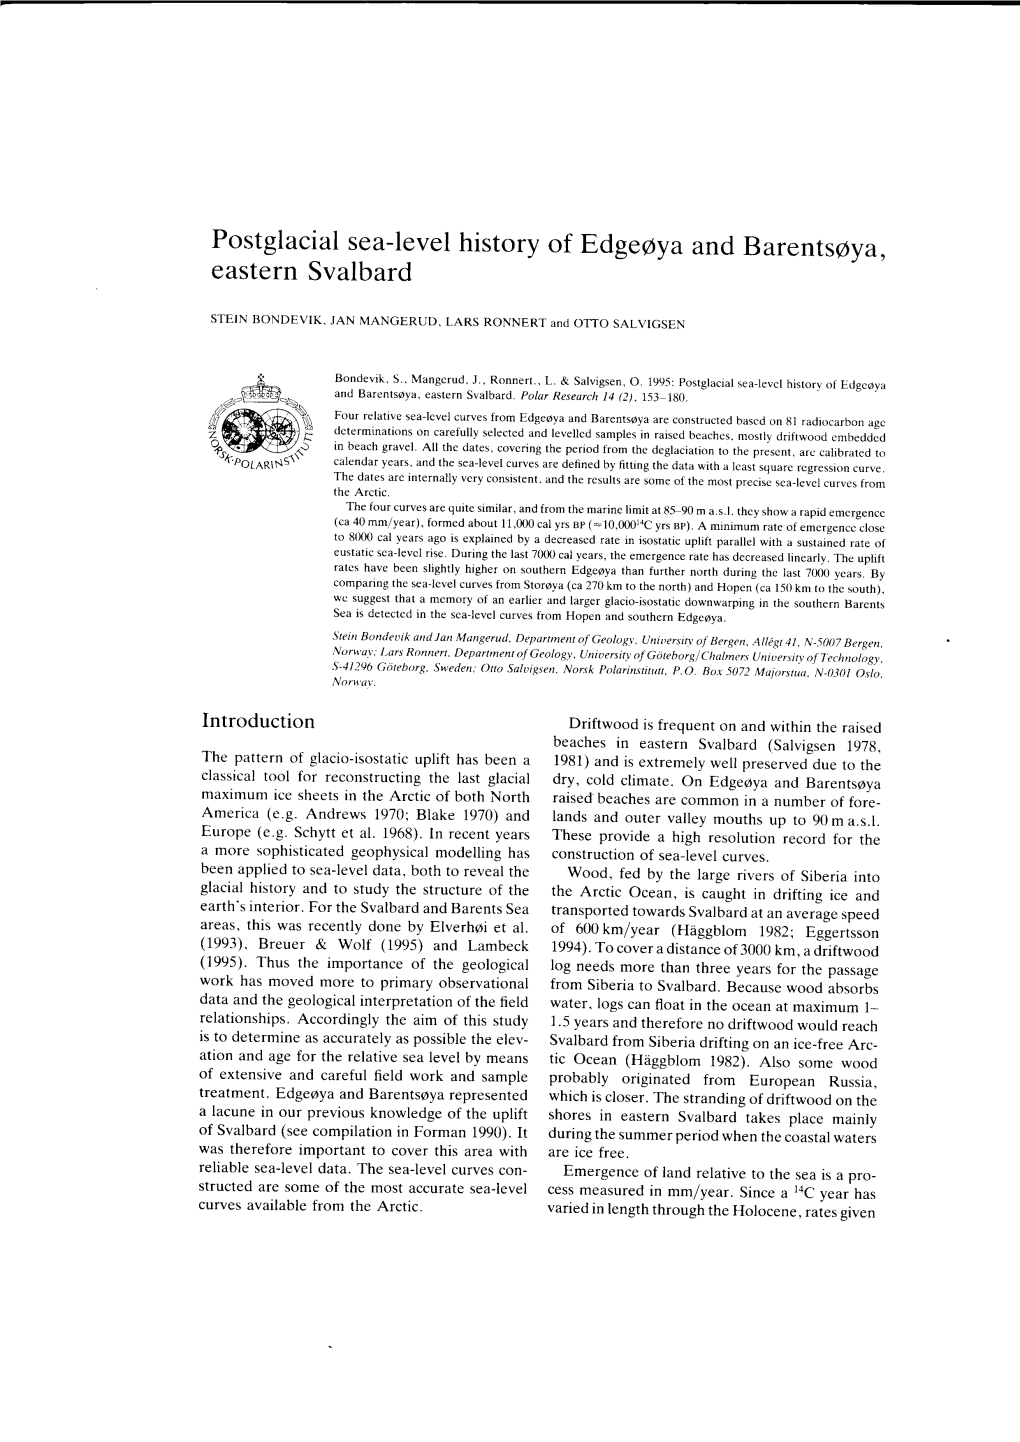 Postglacial Sea-Level History of Edge 6Ya And,B Arents 6V A. Eastern